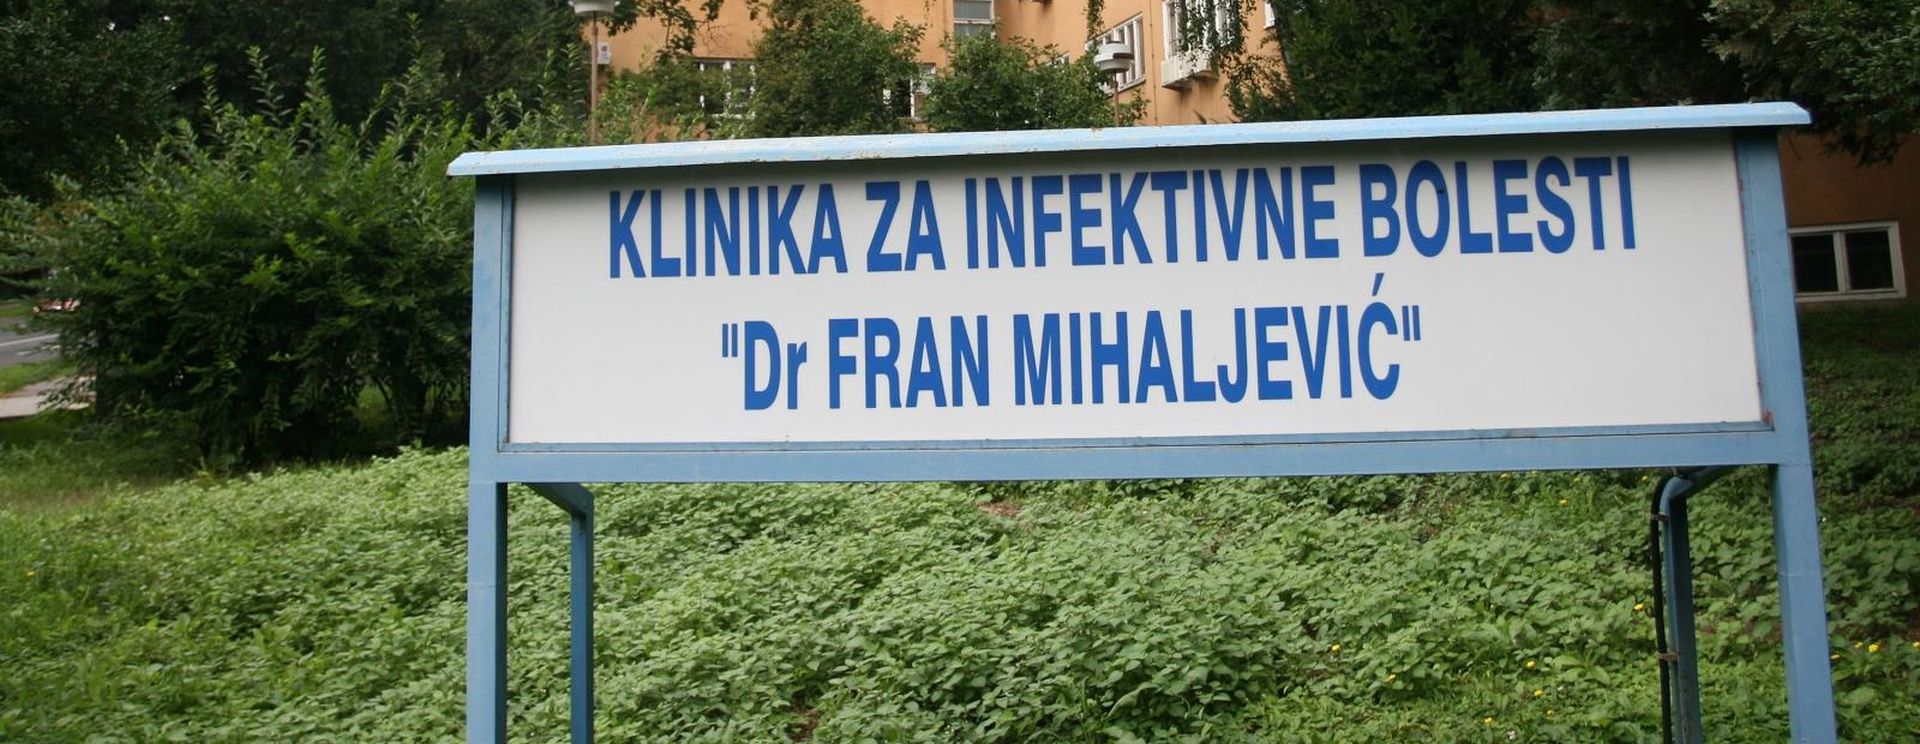 13.09.2010., Zagreb - Klinika za infektivne bolesti "Dr. Fran Mihaljevic". 
Photo: Goran Jakus/PIXSELL